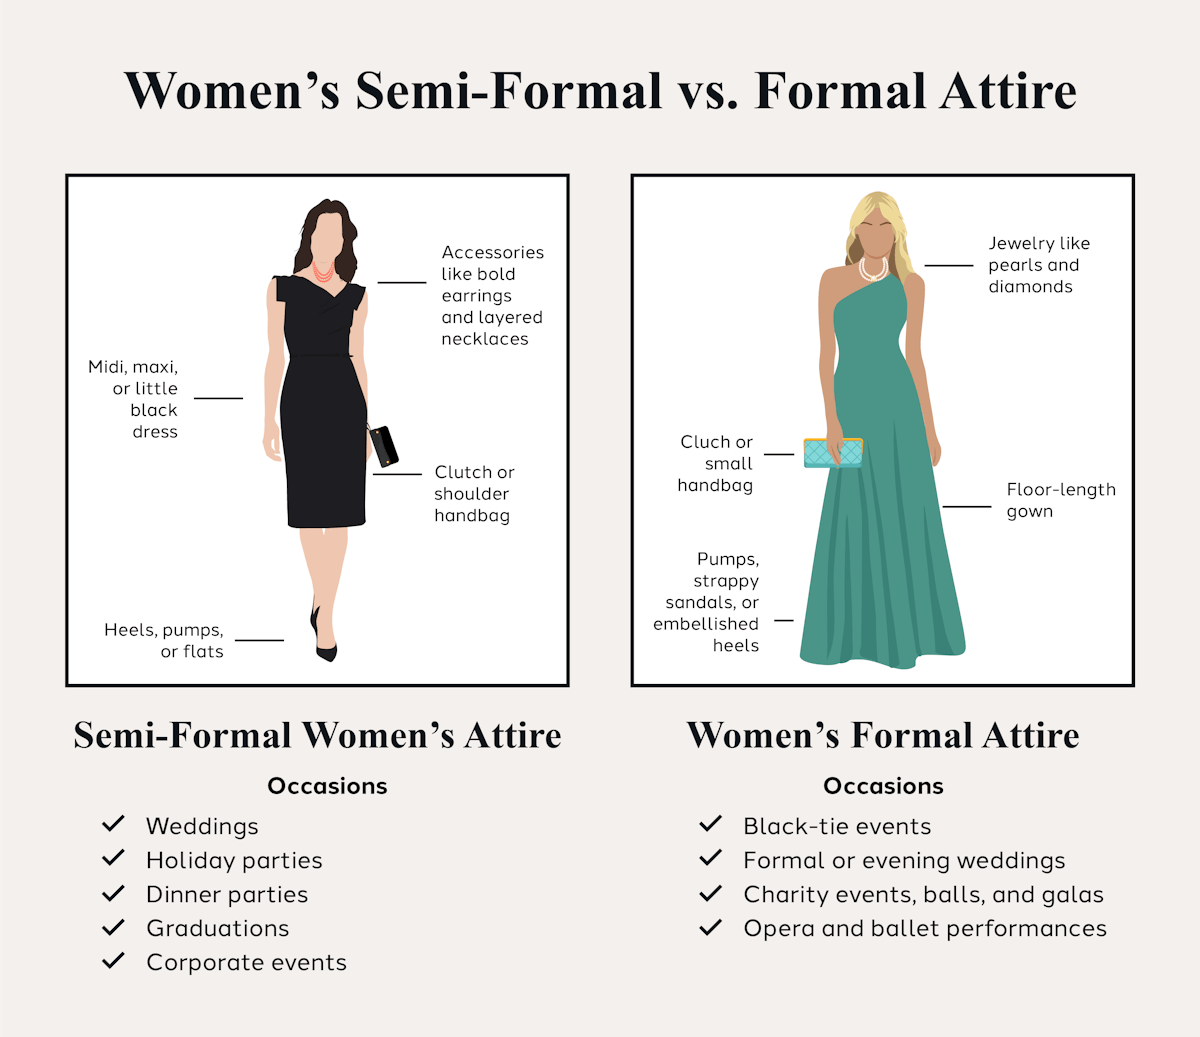 Women’s semi-formal attire vs. formal attire